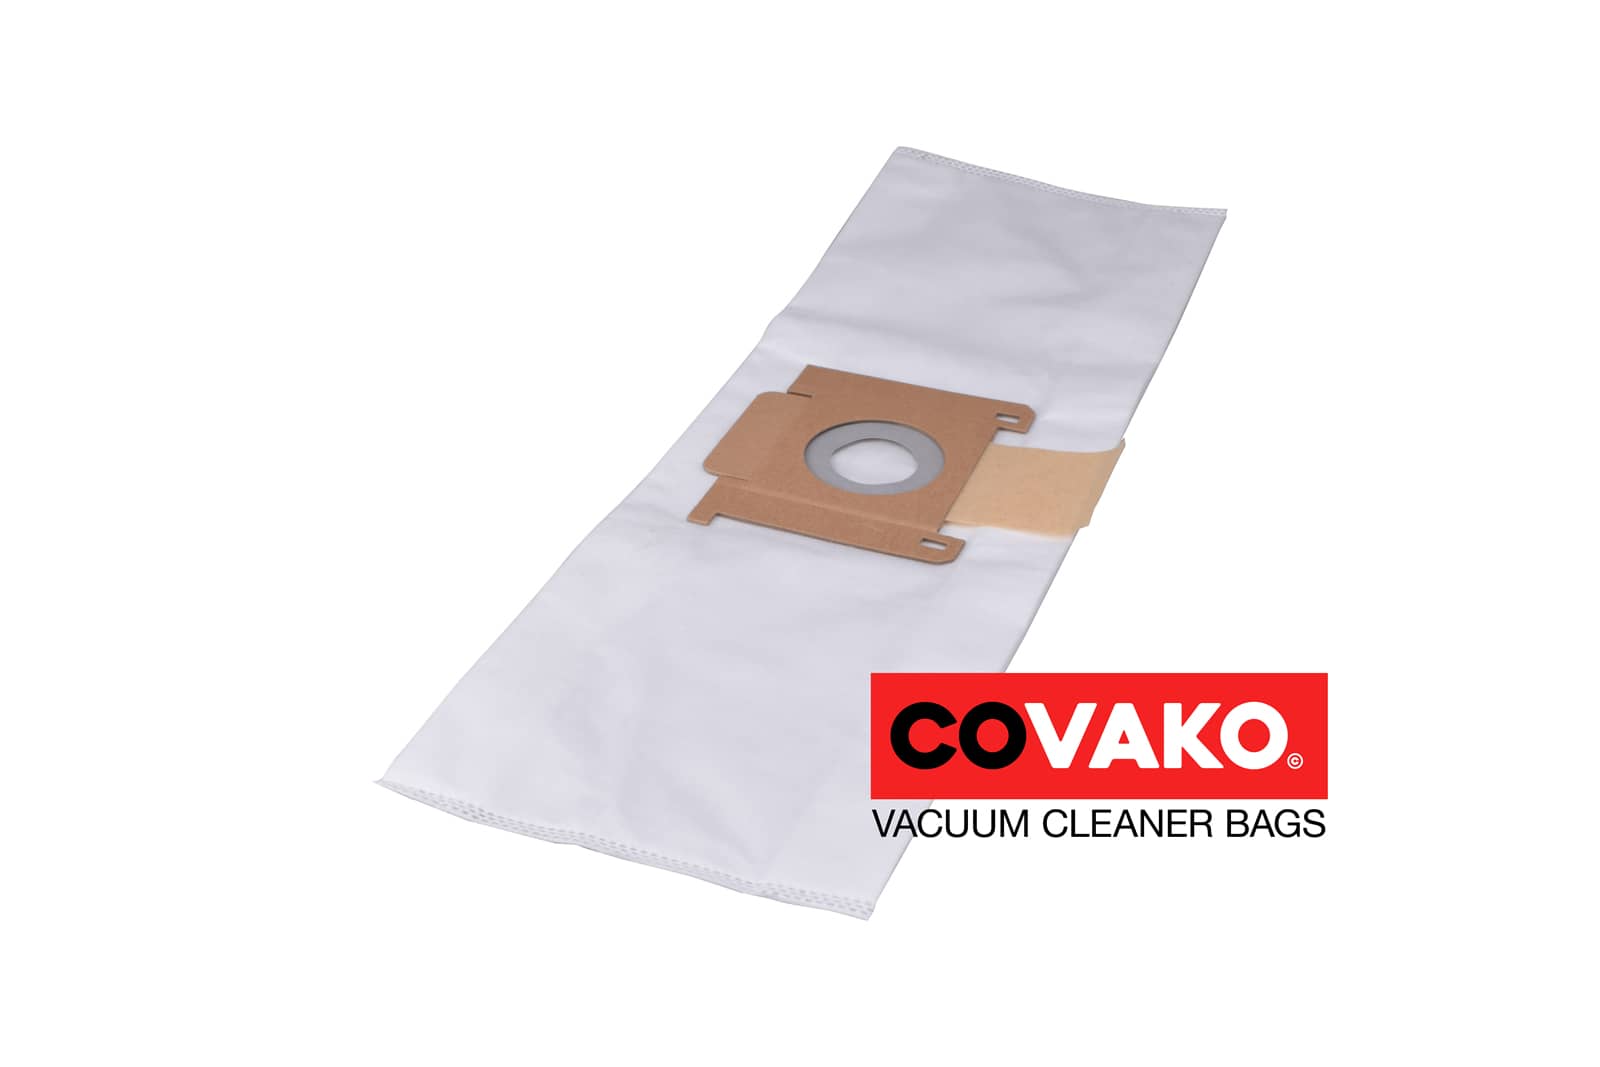 Clean a la Card C 06 / Synthesis - Clean a la Card vacuum cleaner bags